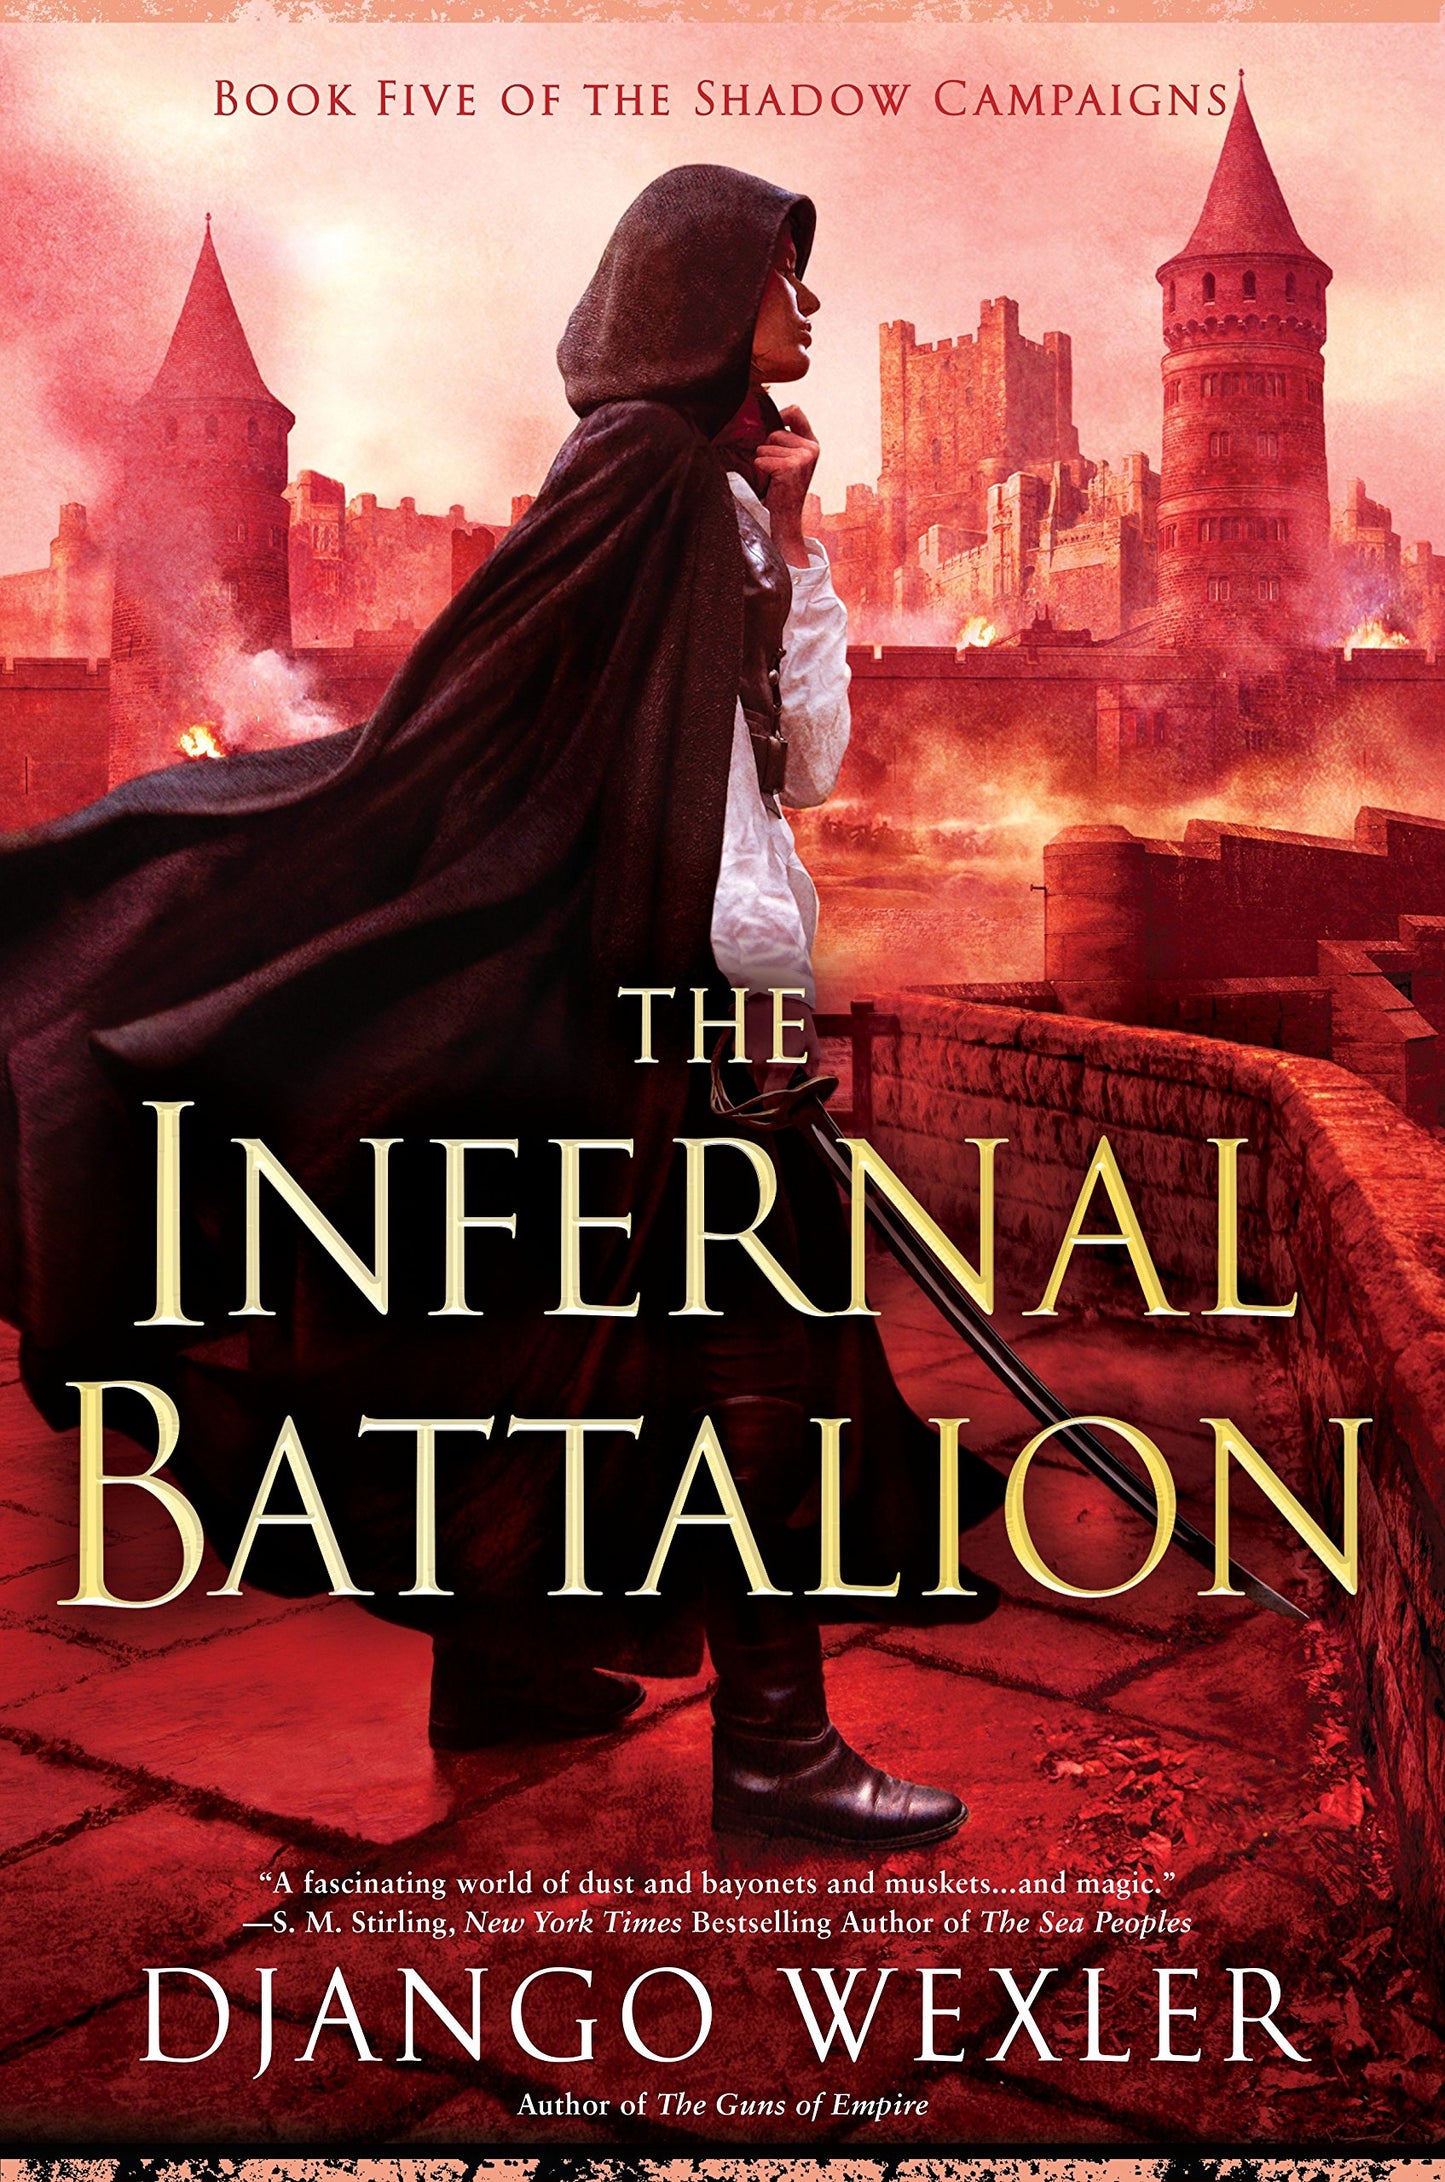 The Infernal Battalion by Django Wexler (Hardcover)